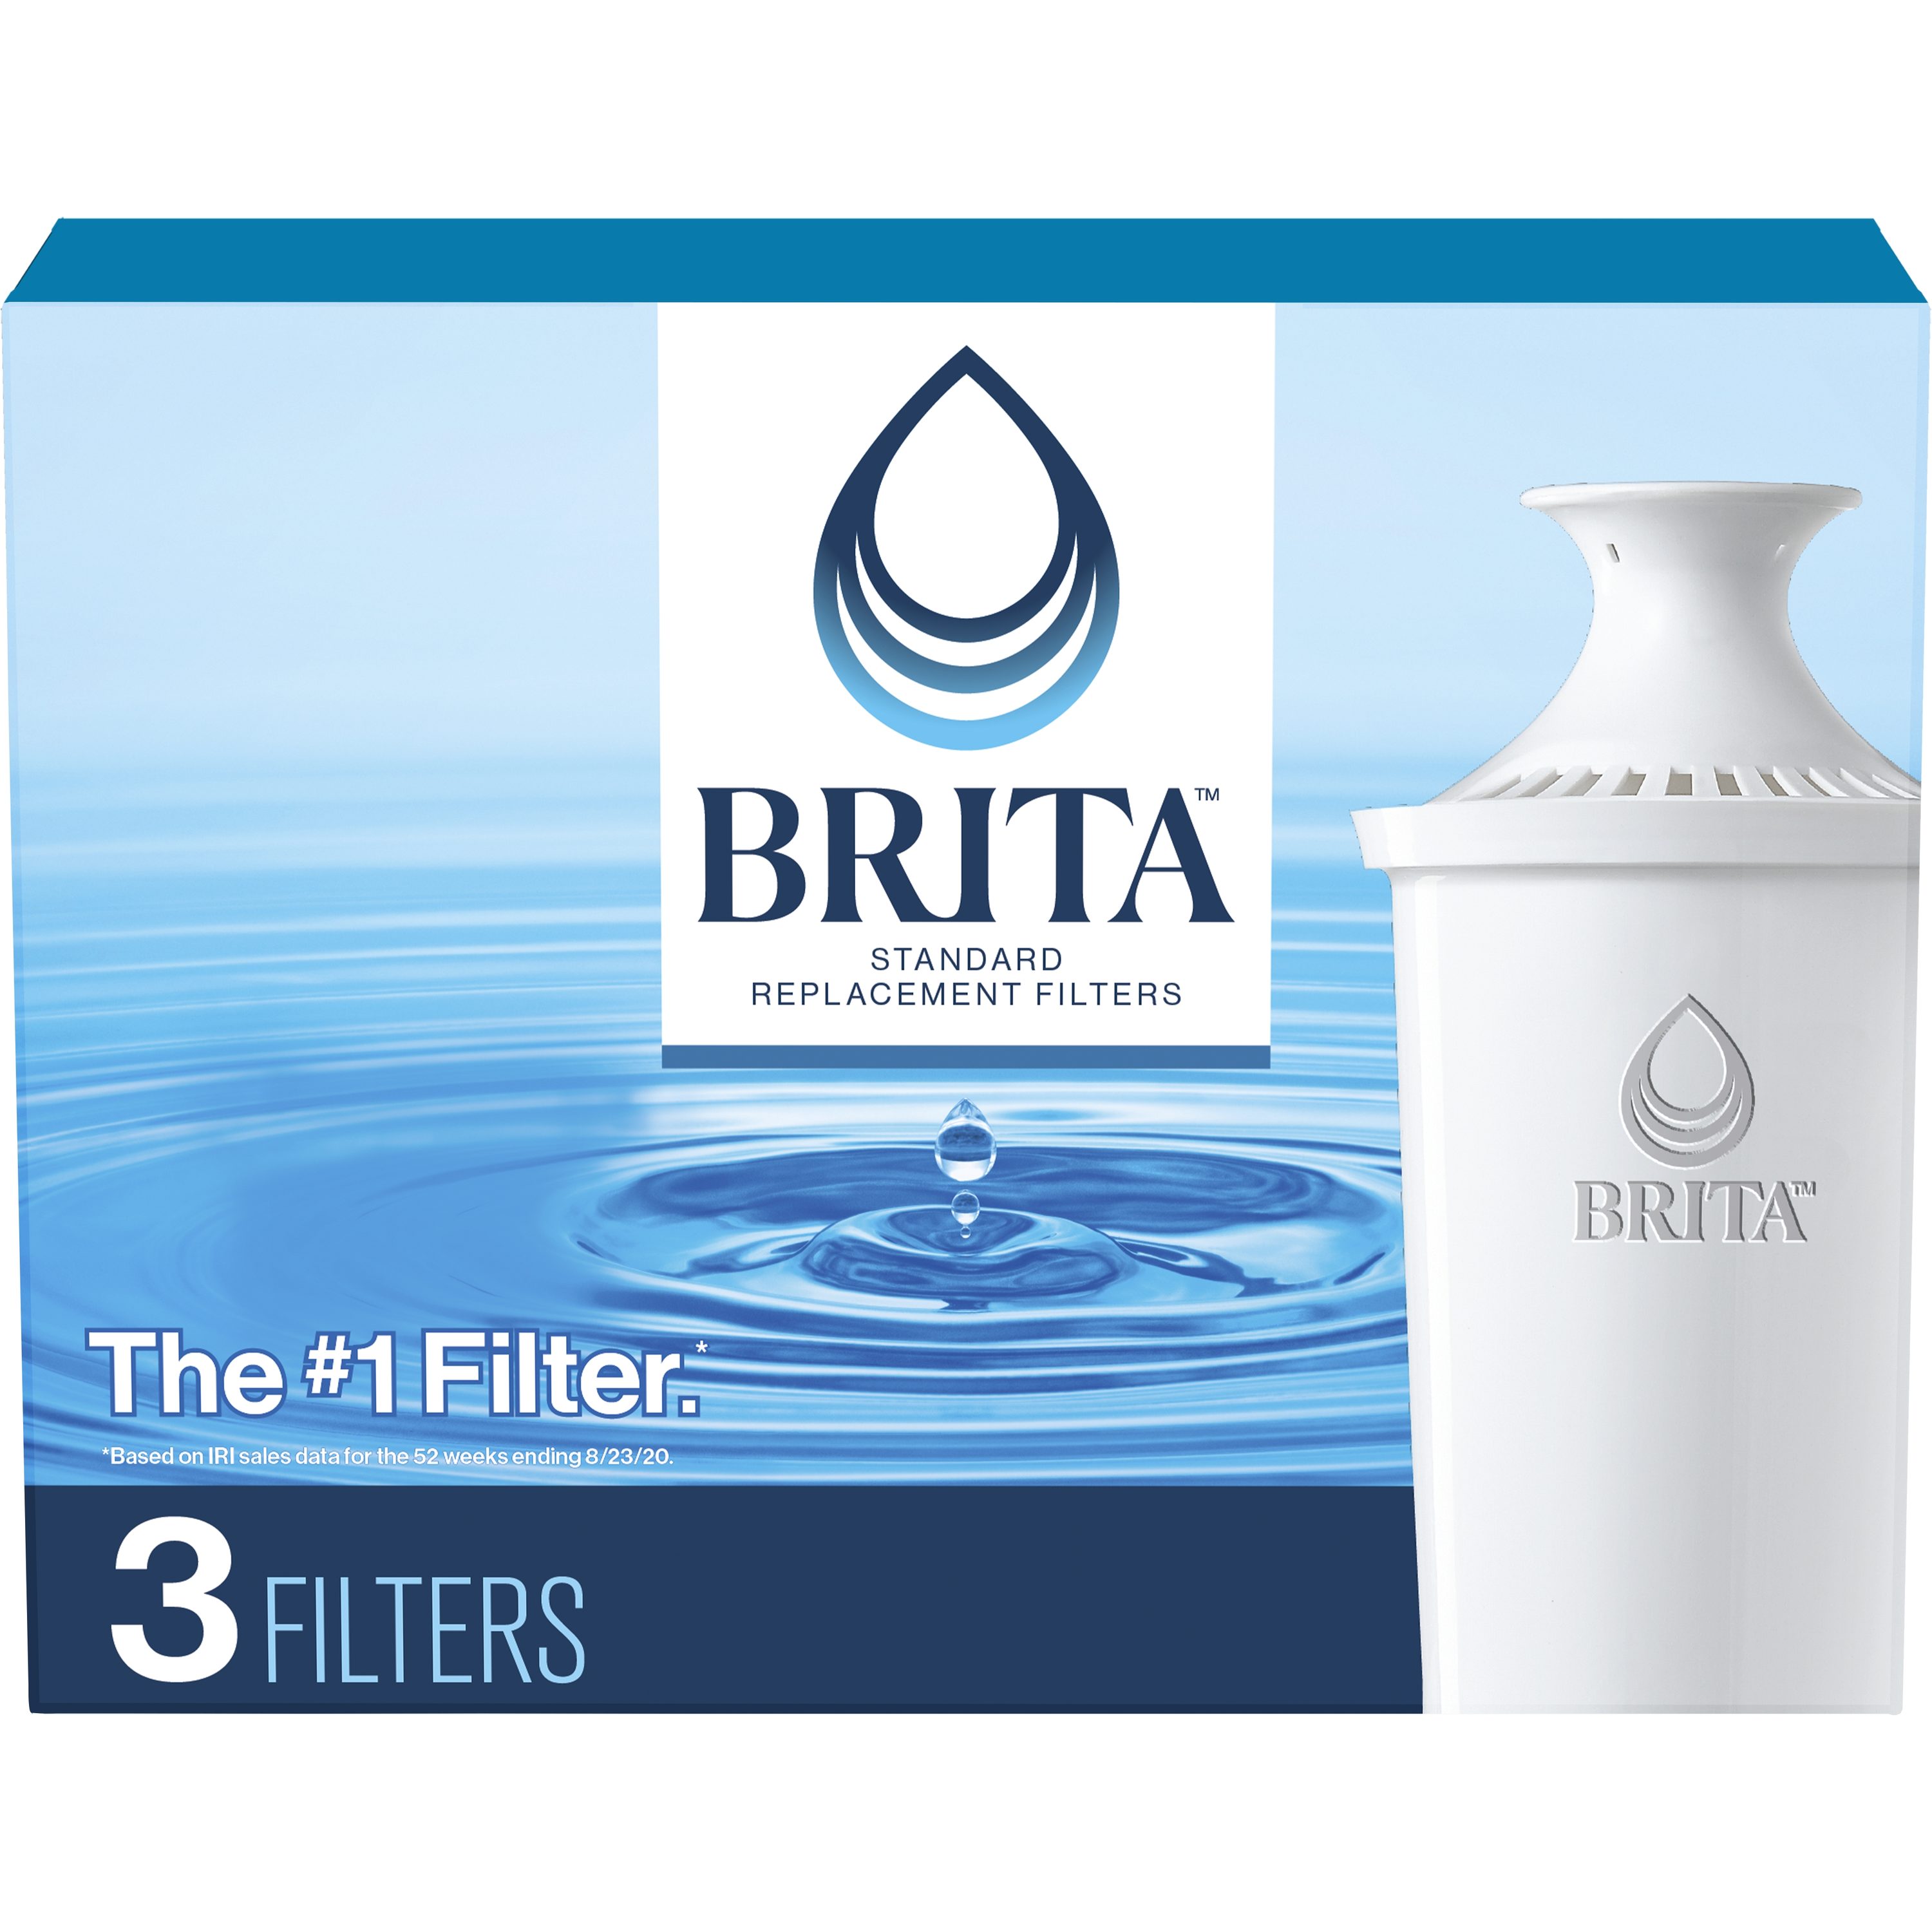 Verenigde Staten van Amerika Vreemdeling Echt Brita Replacement Water Filters & Cartridges at Lowes.com